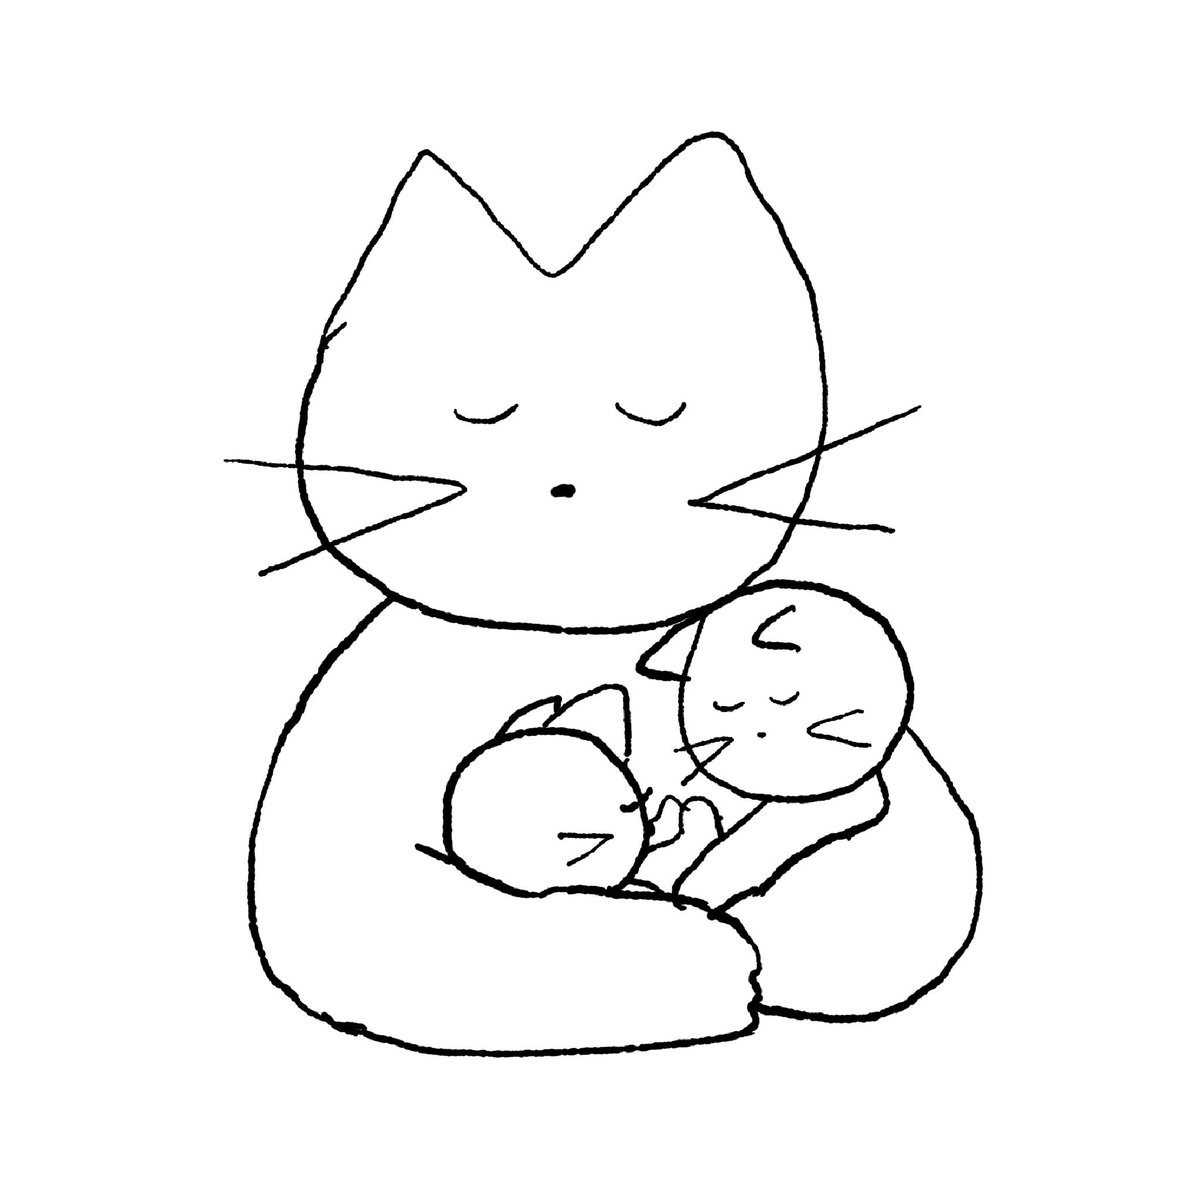 peace of mind 💤

#絵本　#illustrator #illustration #sketchbook #일러스트　#插畫 #cat